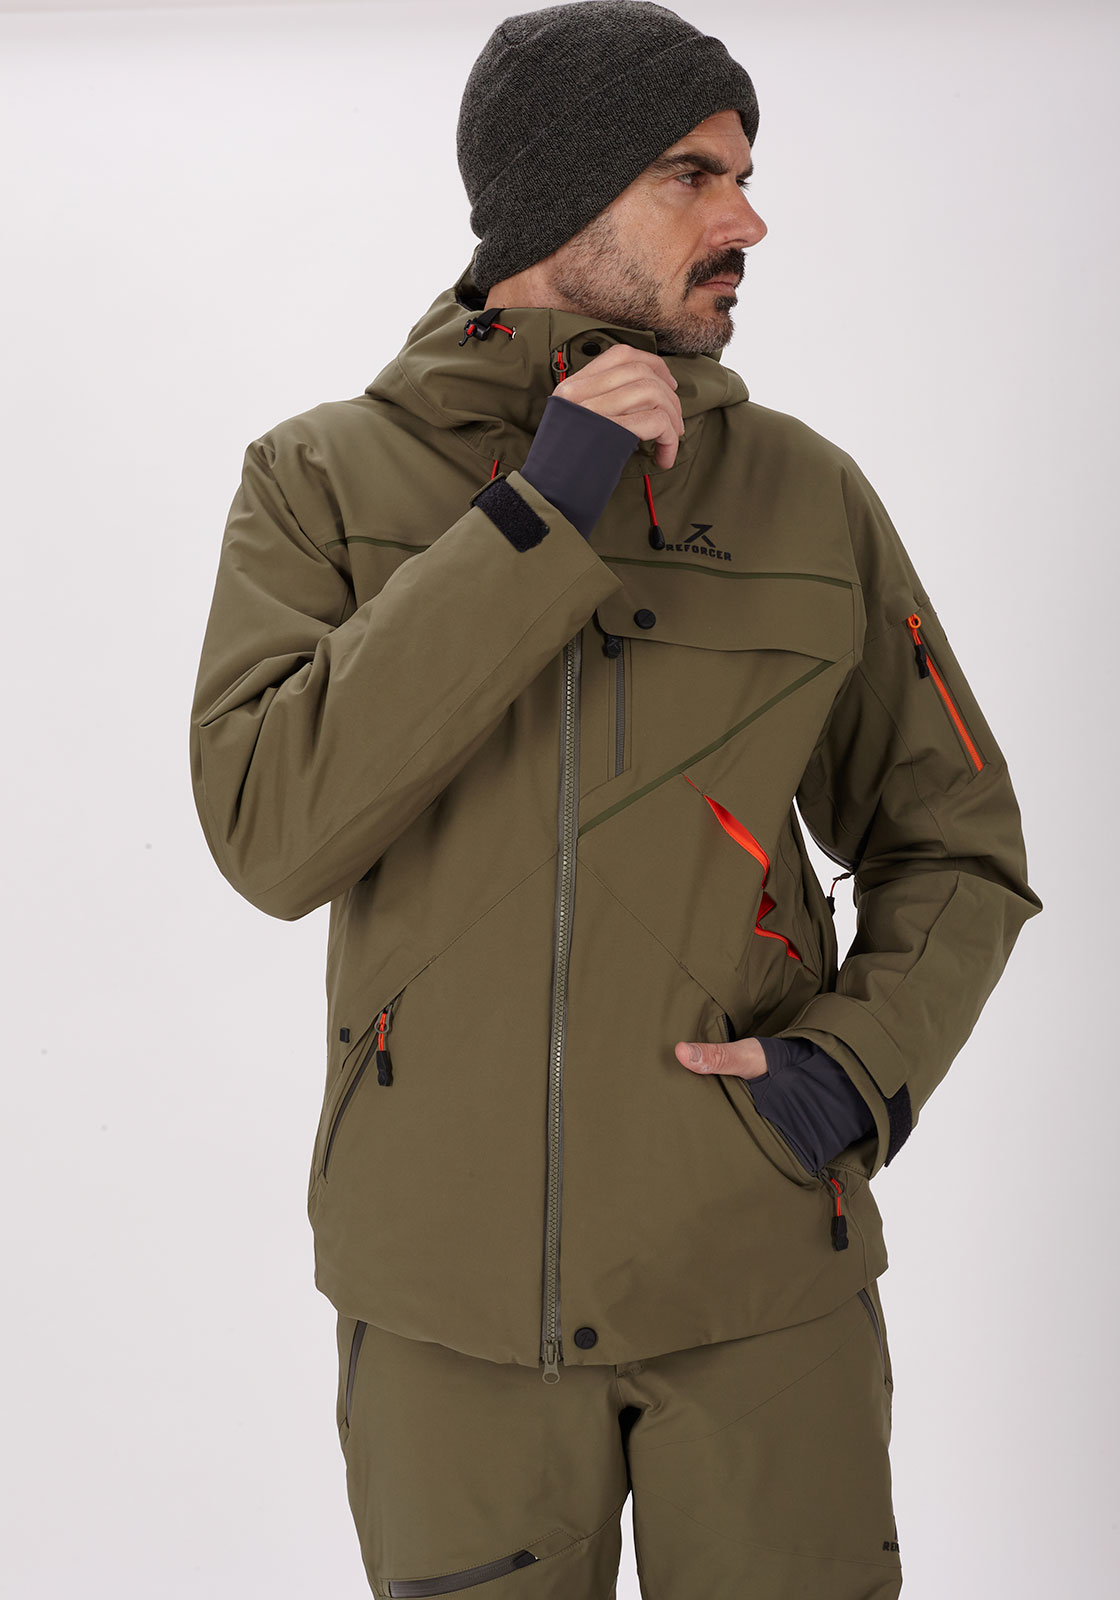 Pantalón de esquí hombre Off Road - Reforcer, ropa de esquí de alta  calidad, hecha en Europa